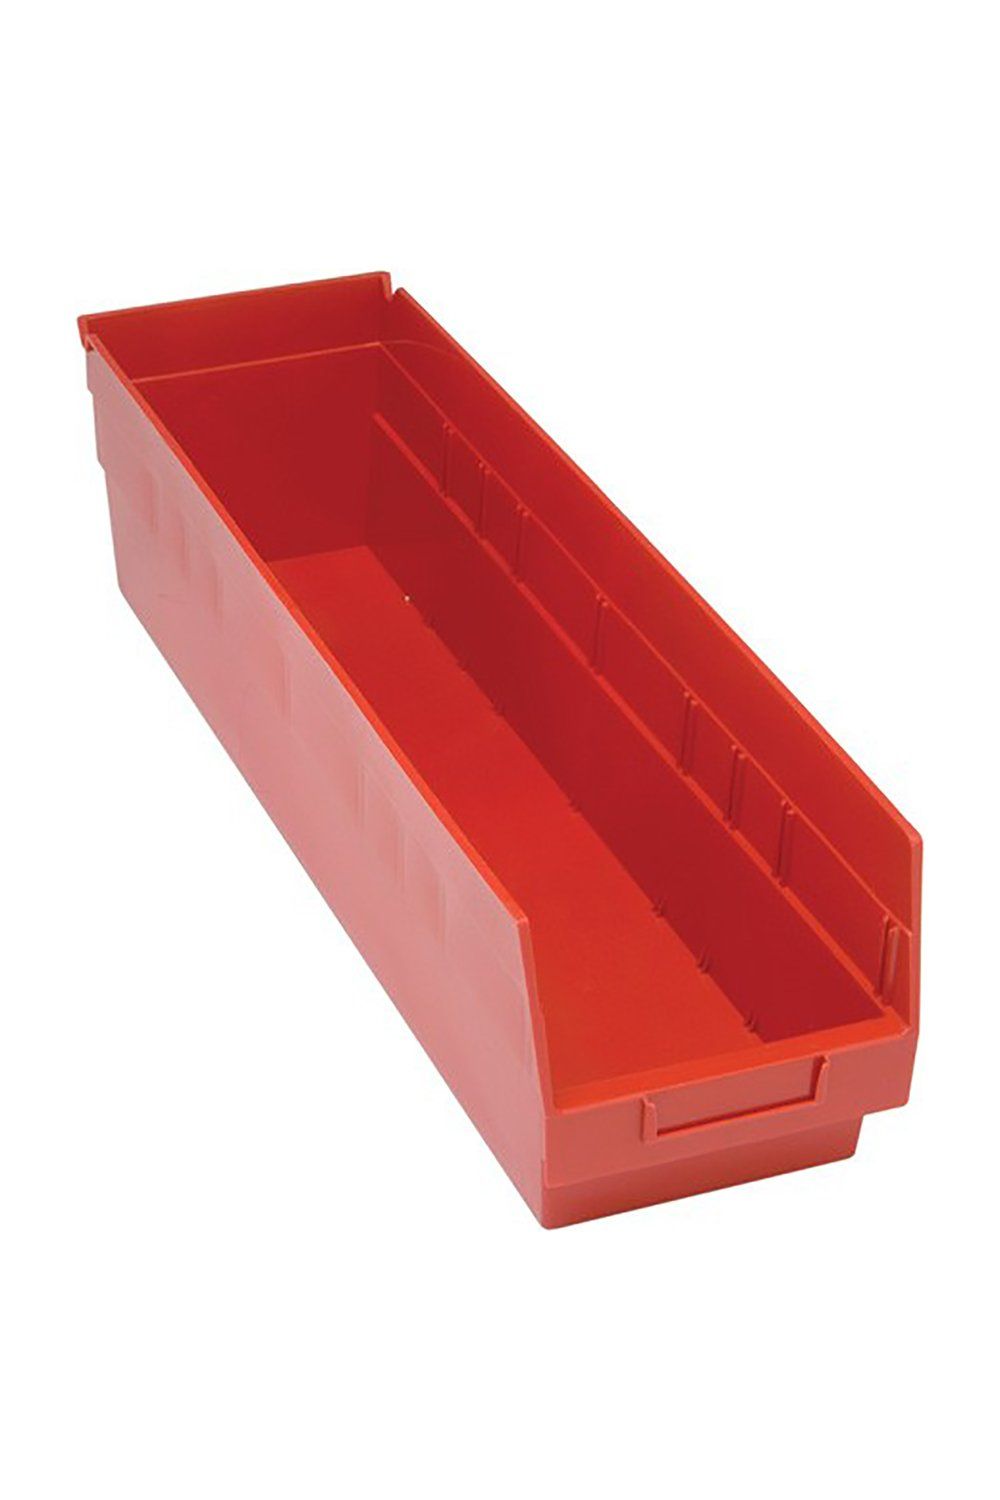 Shelf Bin for 24"D Shelves Bins & Containers Acart 23-5/8'' x 6-5/8'' x 6'' Red 